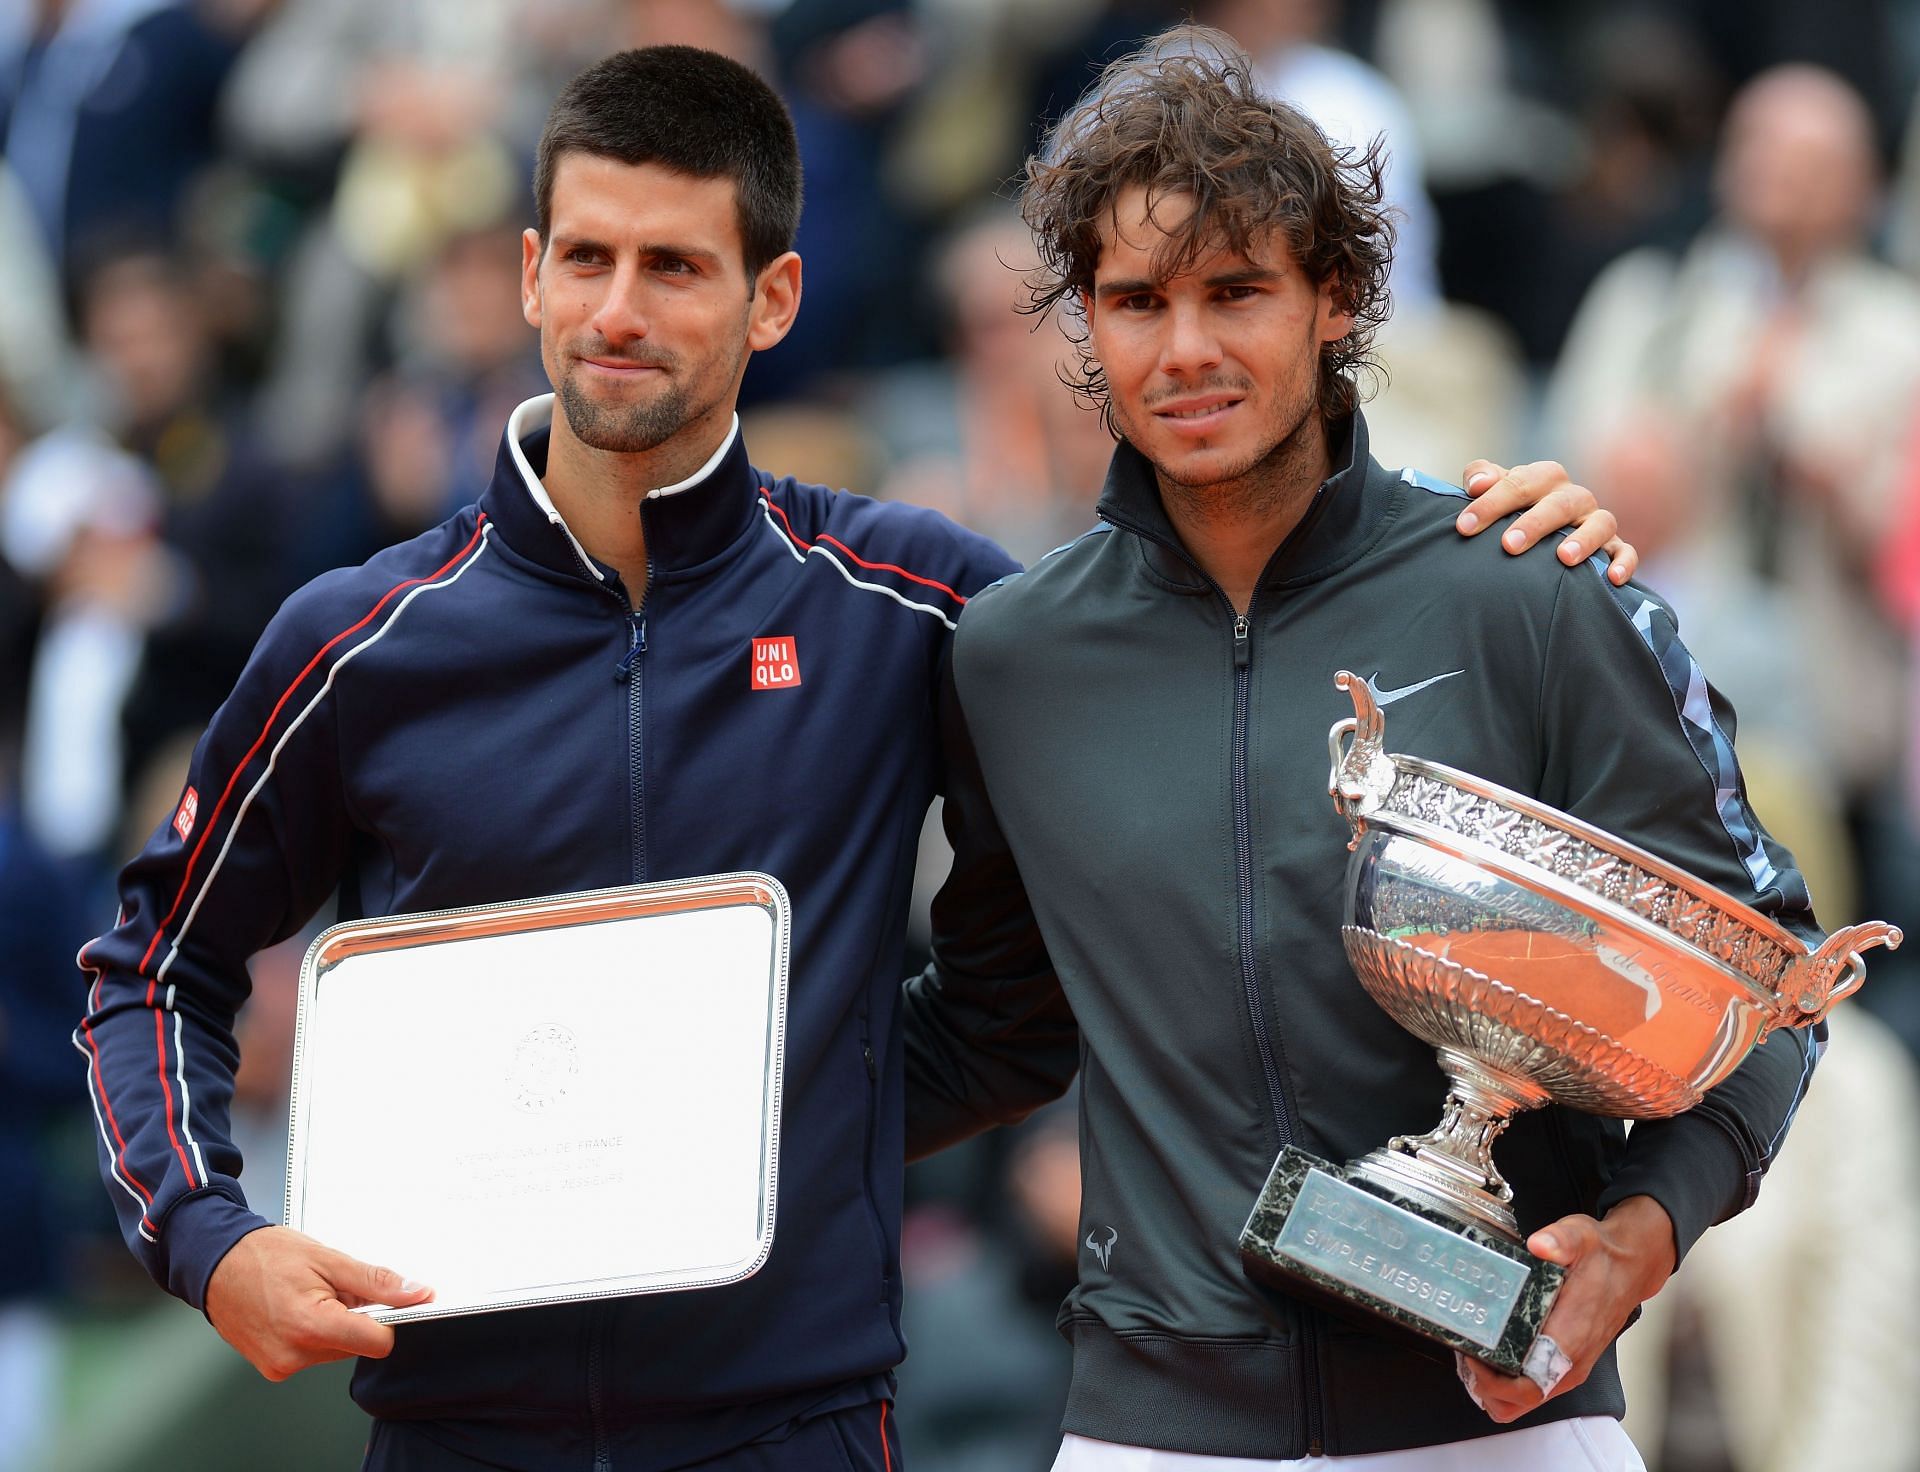 Rafael Nadal defeated Novak Djokovic in the 2012 French Open final